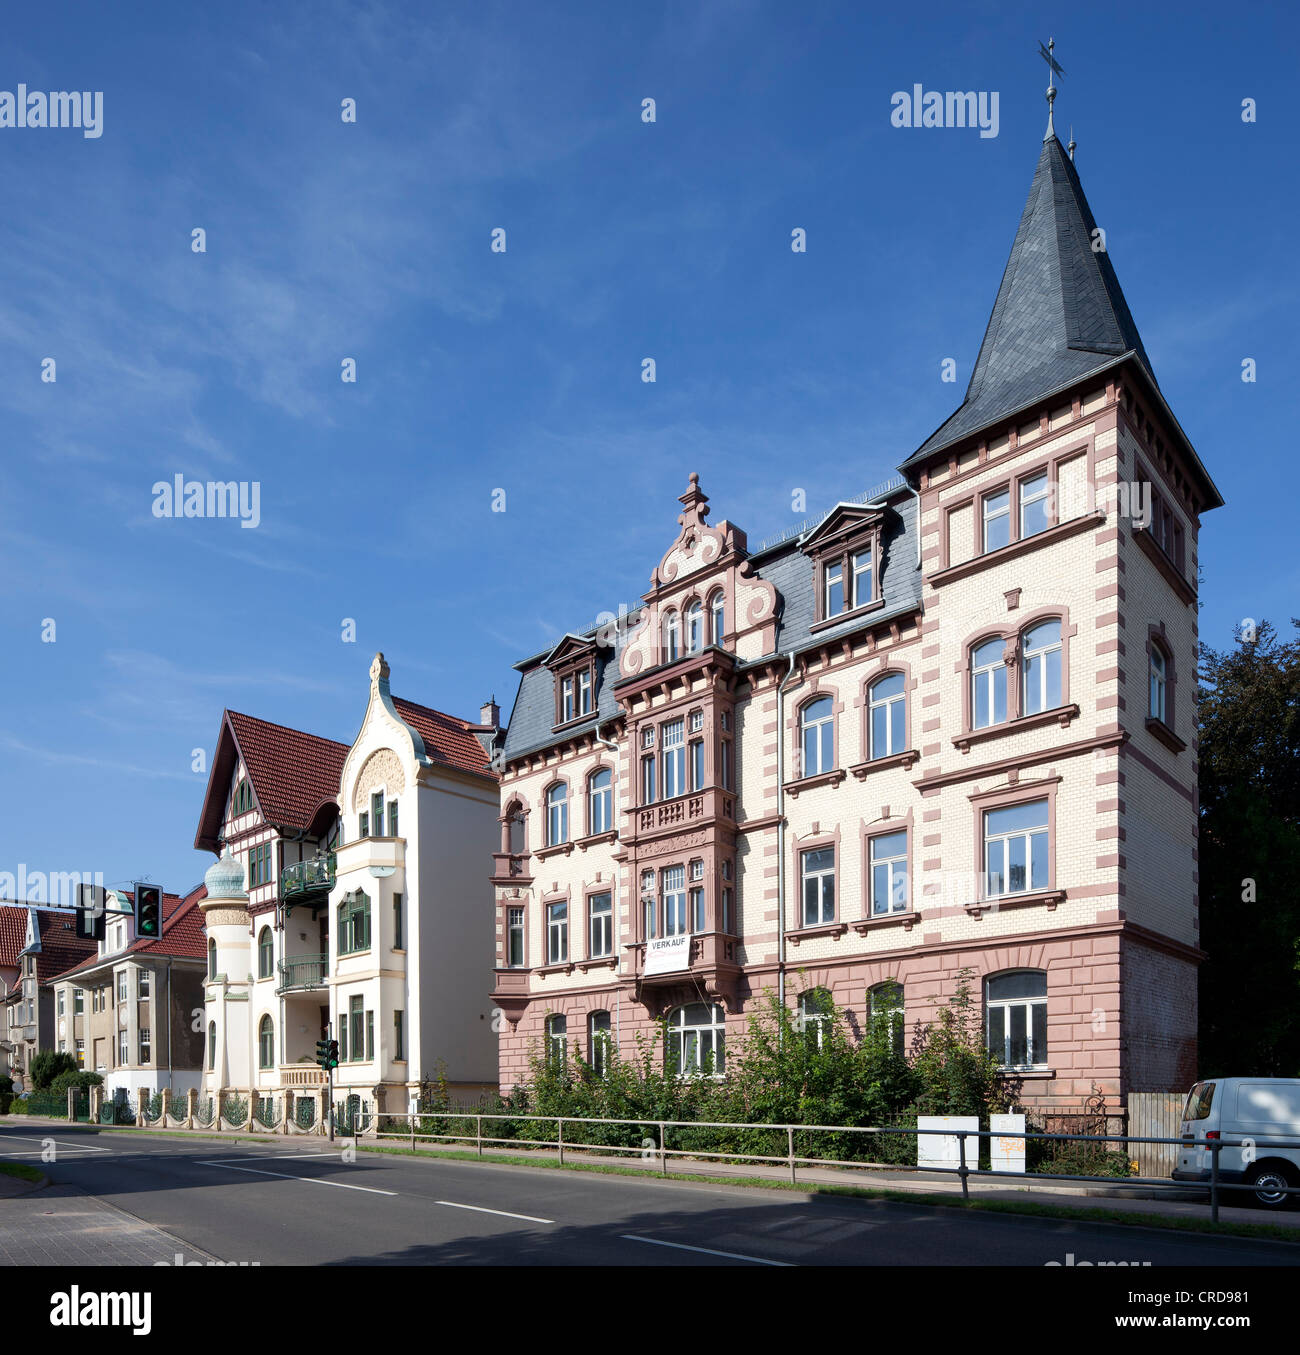 Townhouse, Gruenderzeit period, Eisenach, Thuringia, Germany, Europe, PublicGround Stock Photo